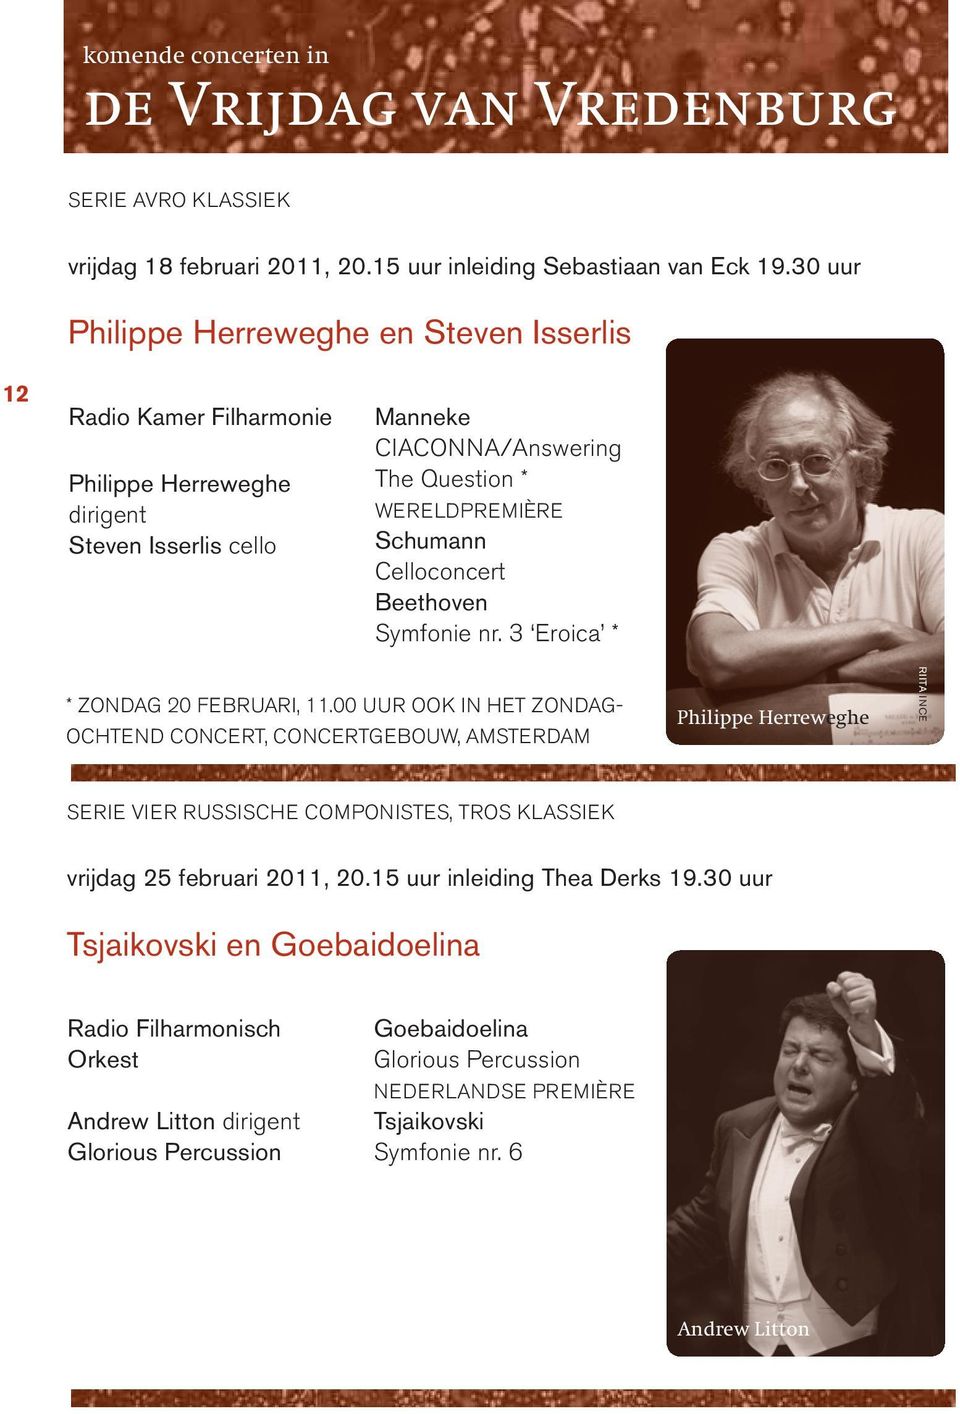 Celloconcert Beethoven Symfonie nr. 3 Eroica * * ZONDAG 20 FEBRUARI, 11.